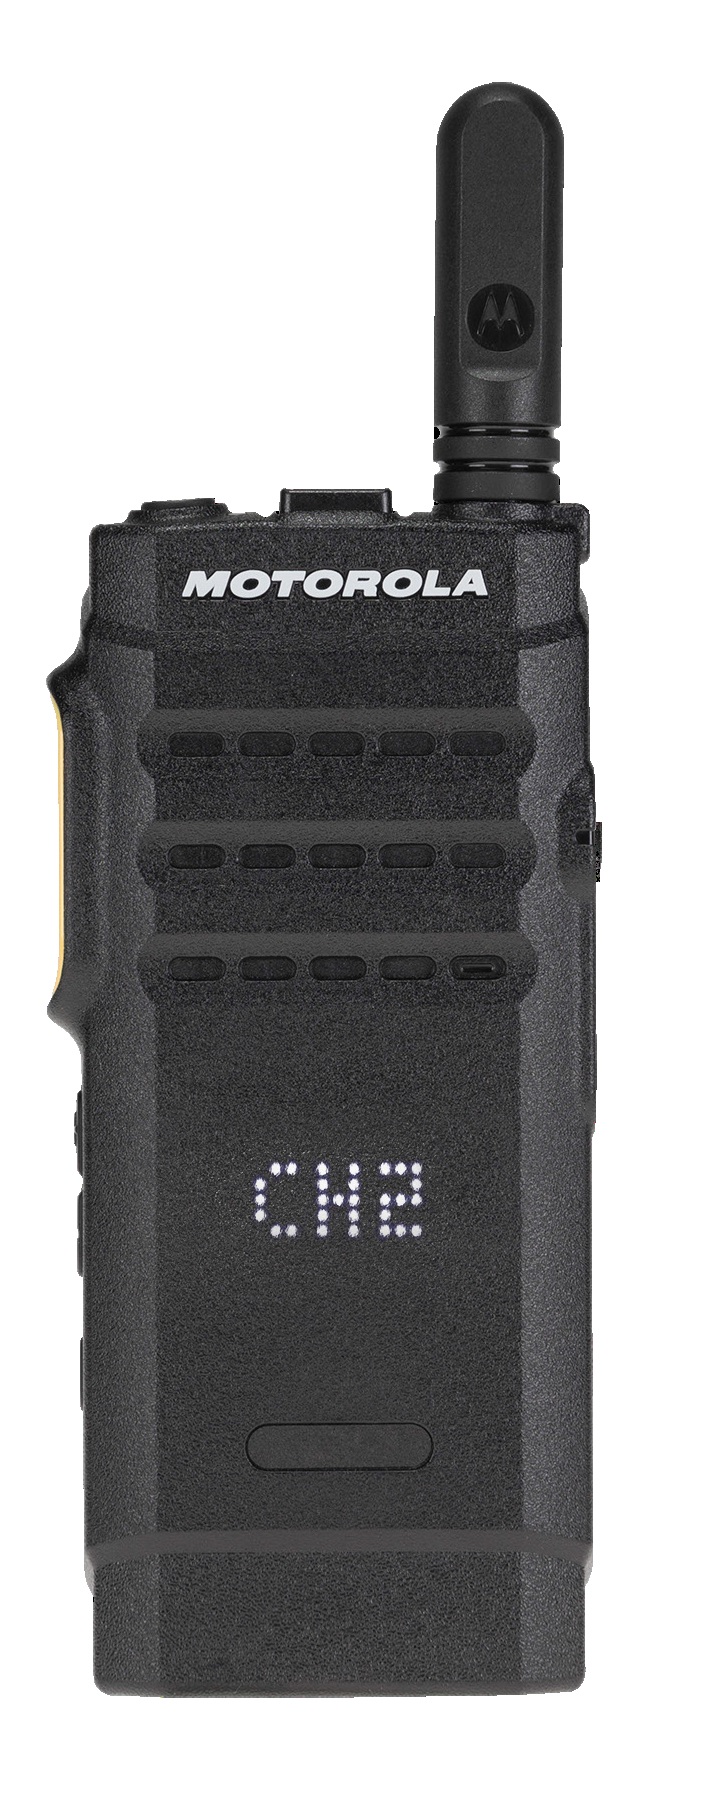 Motorola SL300, VHF (136-174 MHz), 3 Watts, 99 Channels, Digital/Analog Radio, Display Model